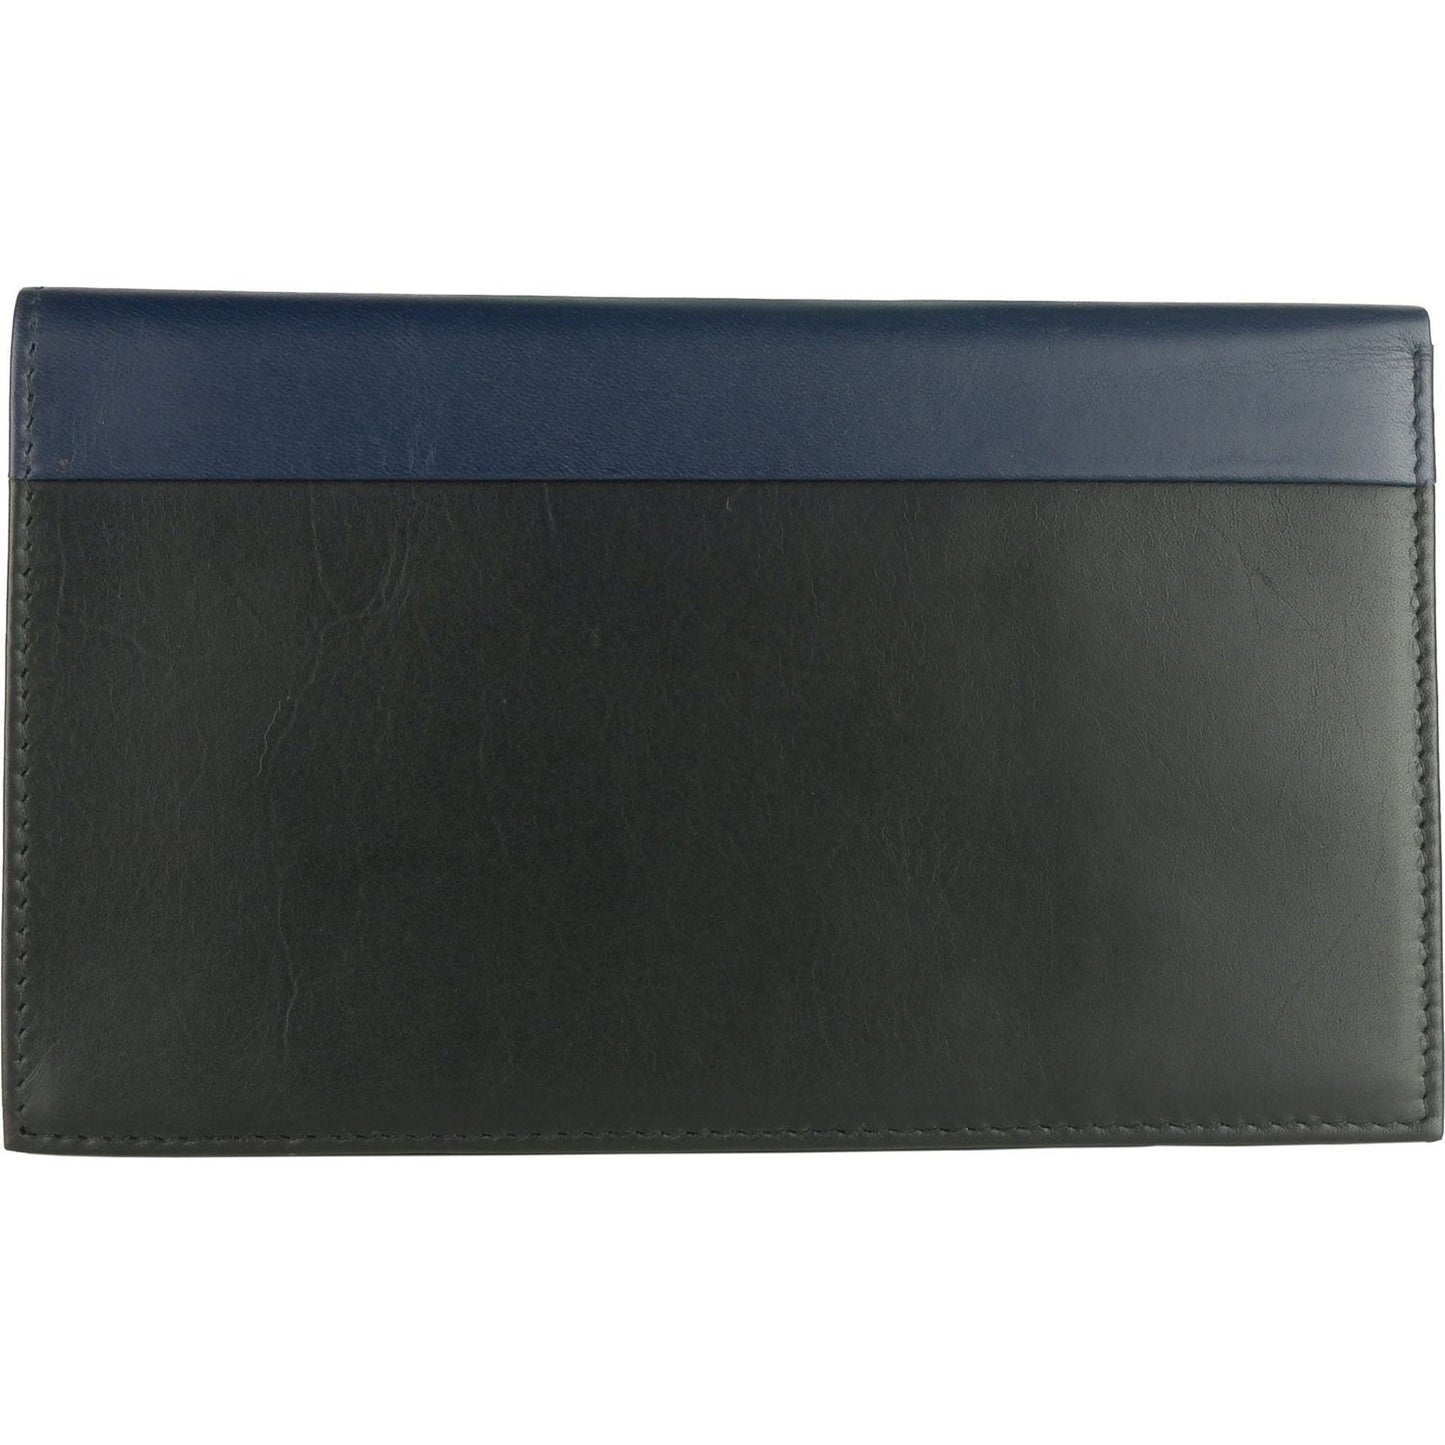 Cavalli Class Elegant Dual-Tone Leather Wallet MAN WALLETS cci-b-cavalli-class-wallet product-6875-2071201192-3-scaled-aa20bcfe-87a.jpg